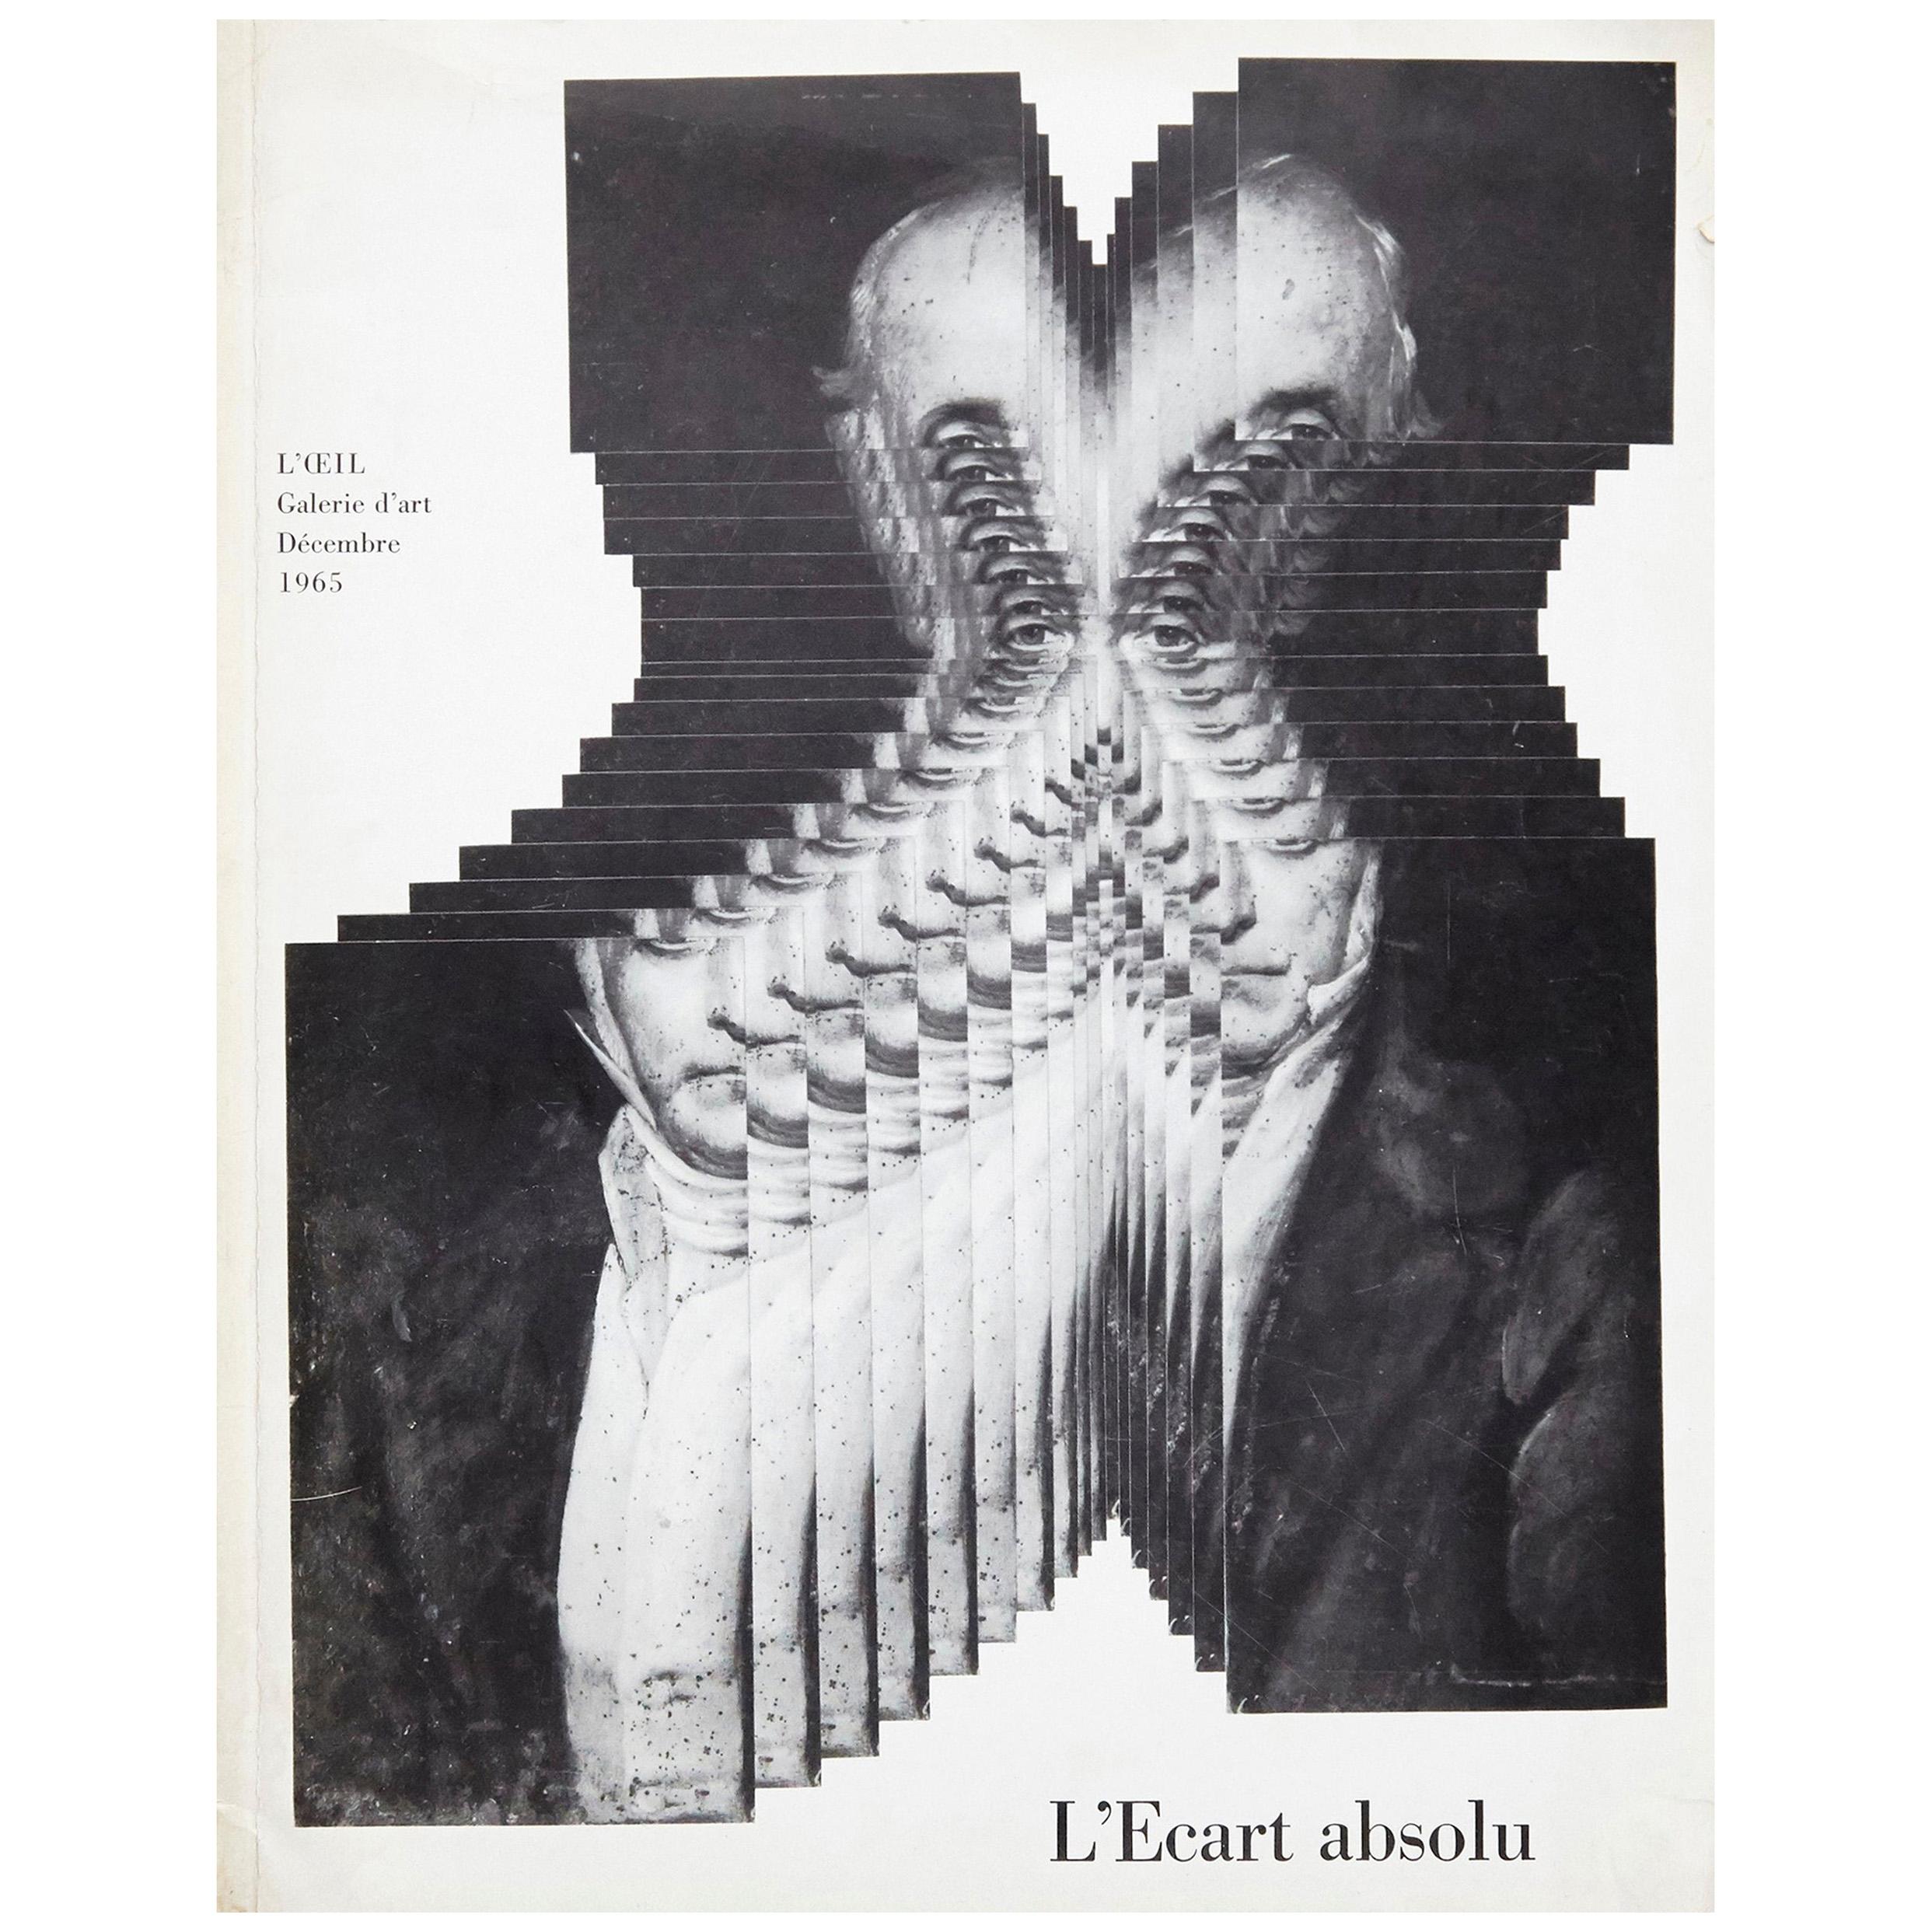 "L'Écart Absolu" by L'ŒIL Gallery Catalogue